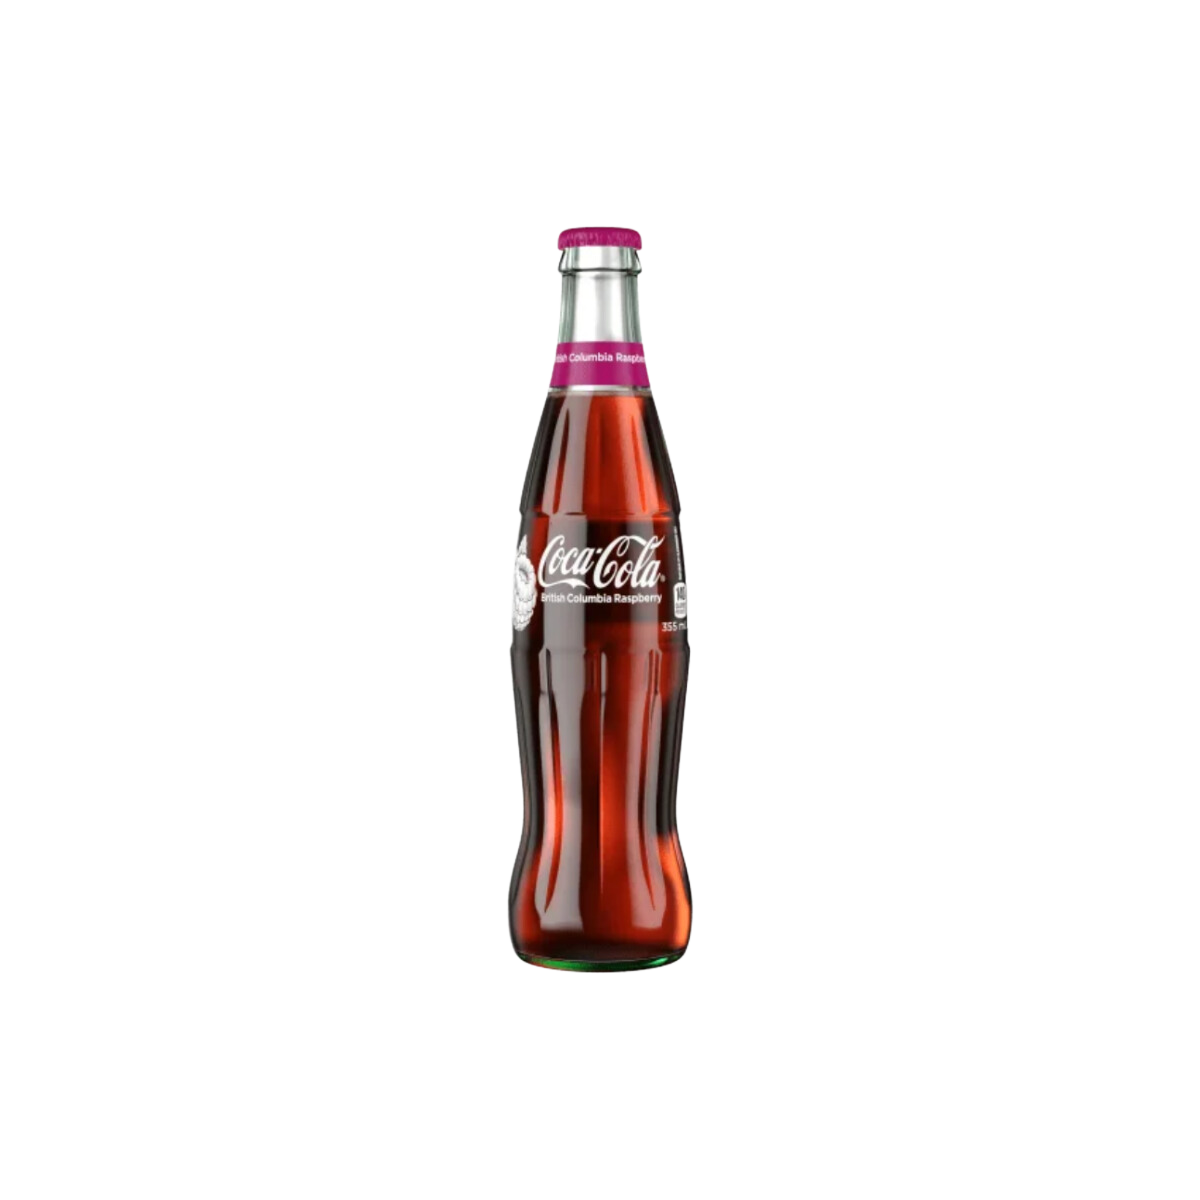 Coca Cola British Columbia Raspberry